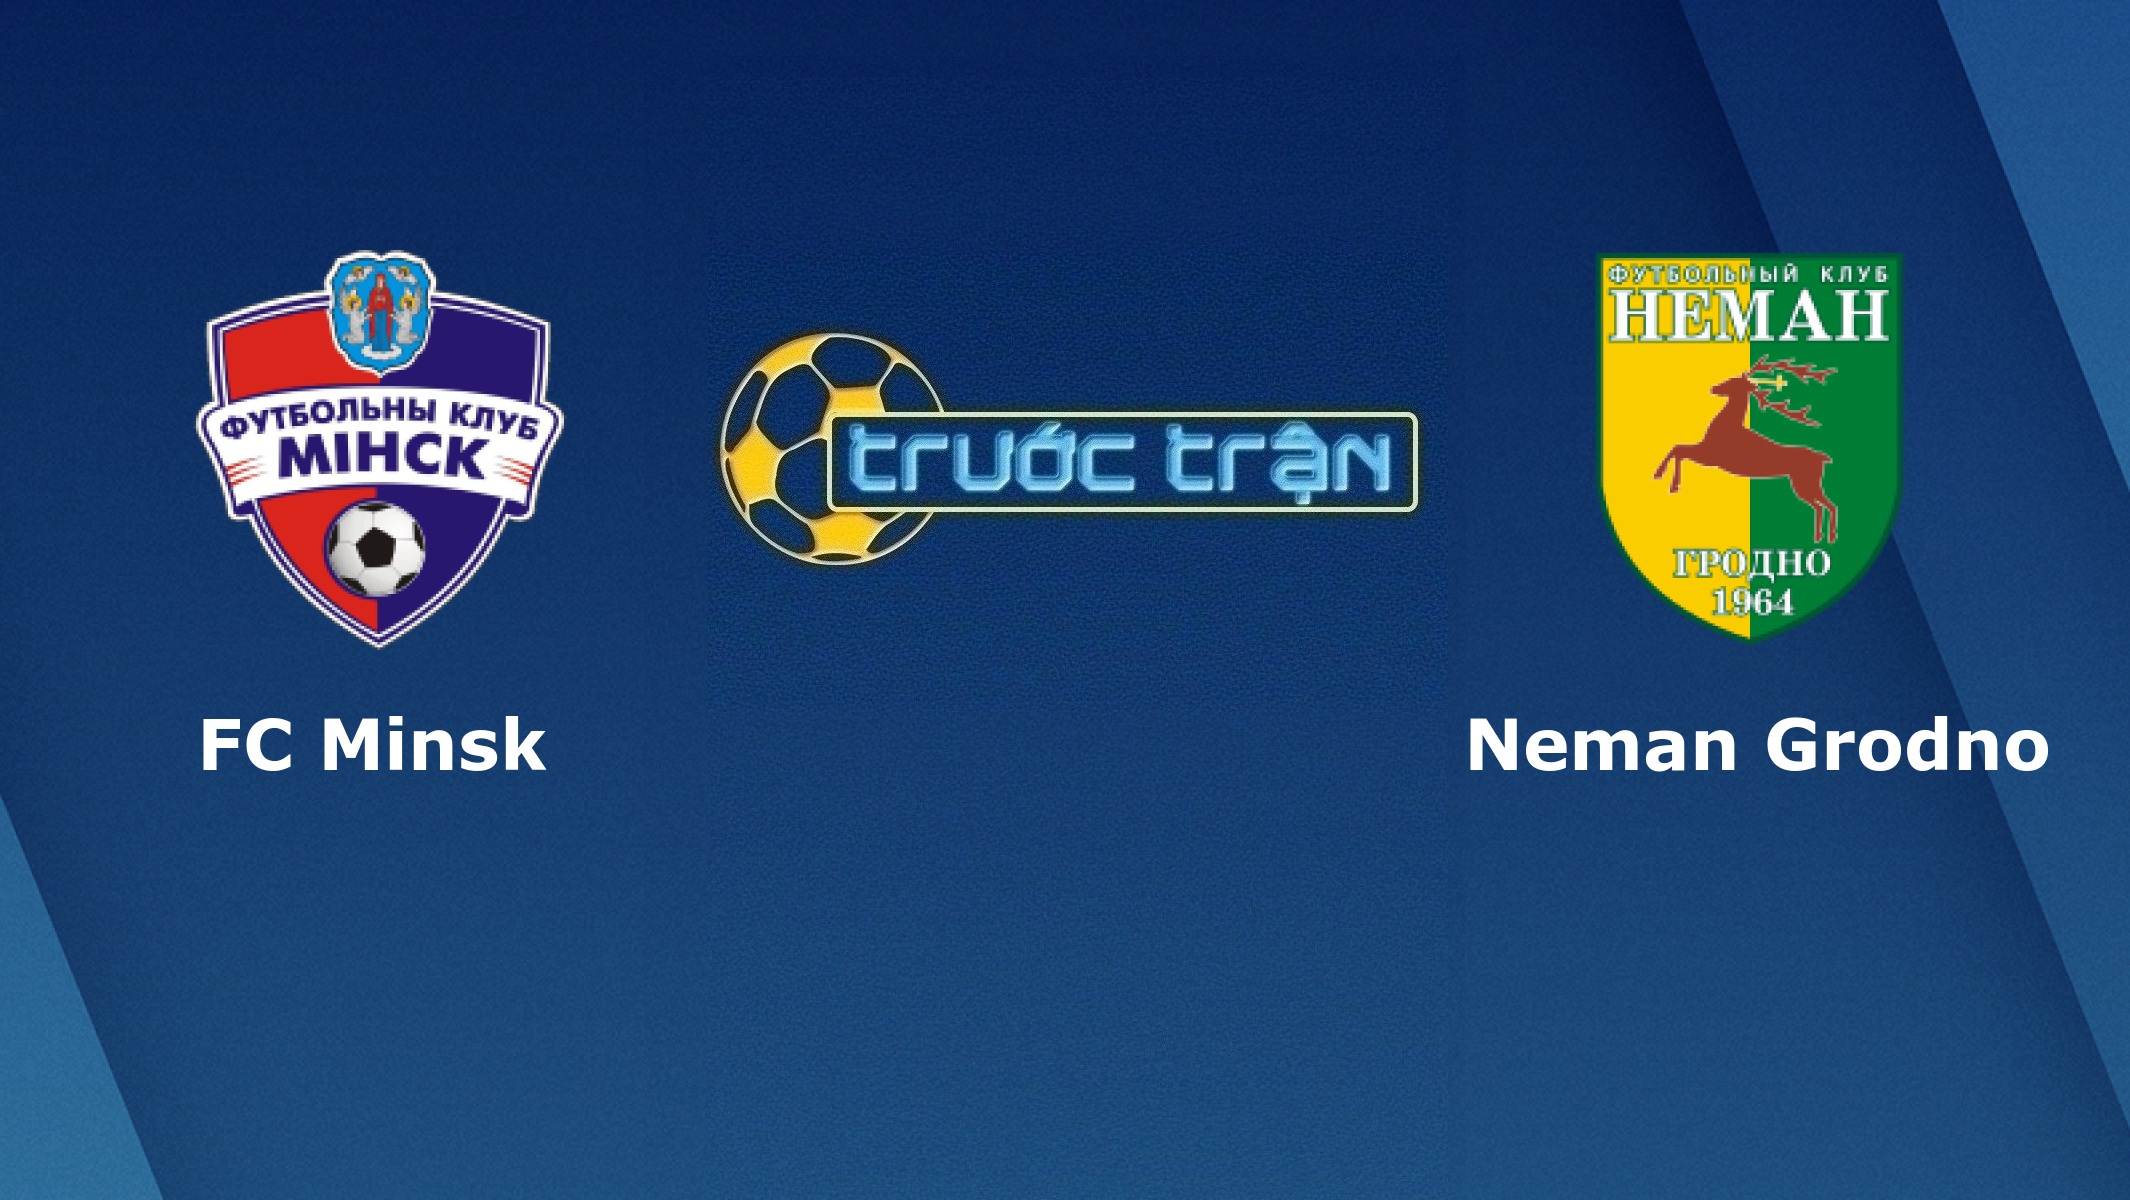 FC Minsk vs Neman Grodno – Tip kèo bóng đá hôm nay – 15/05